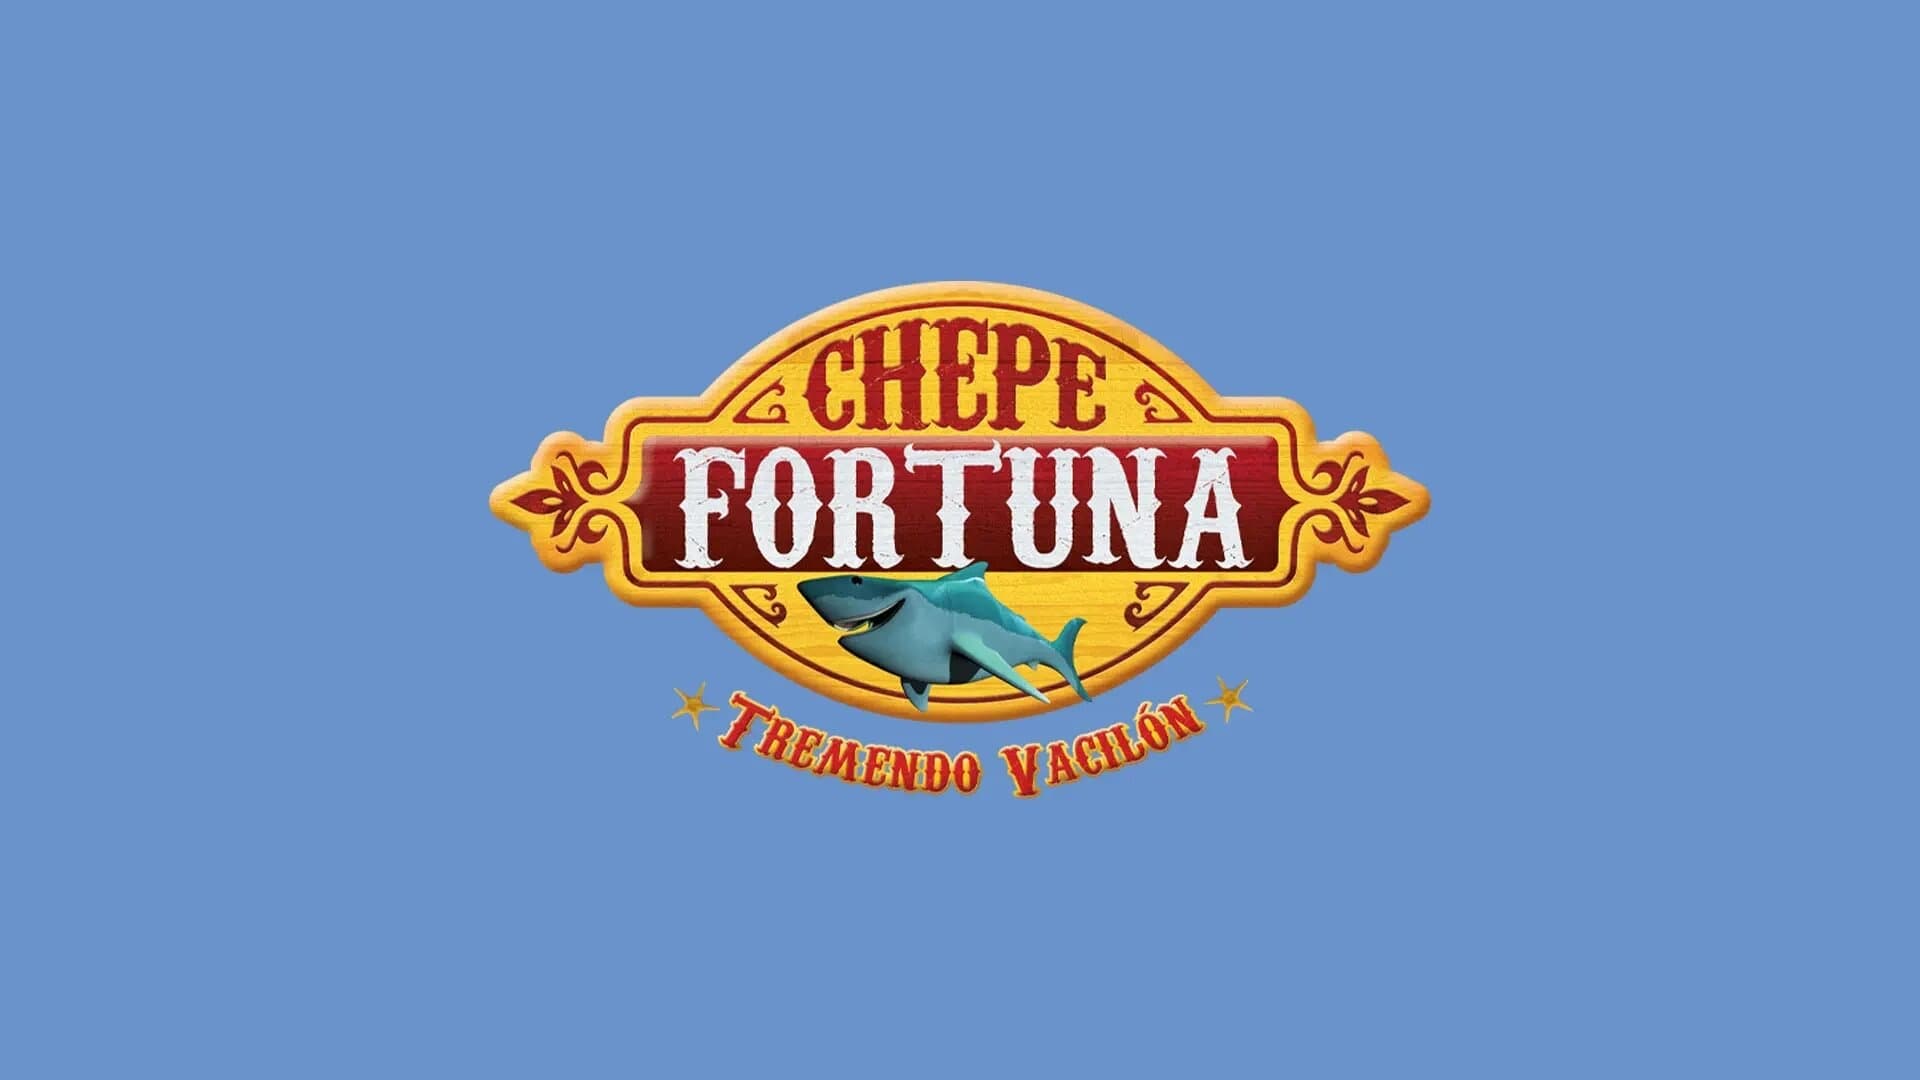 Chepe Fortuna